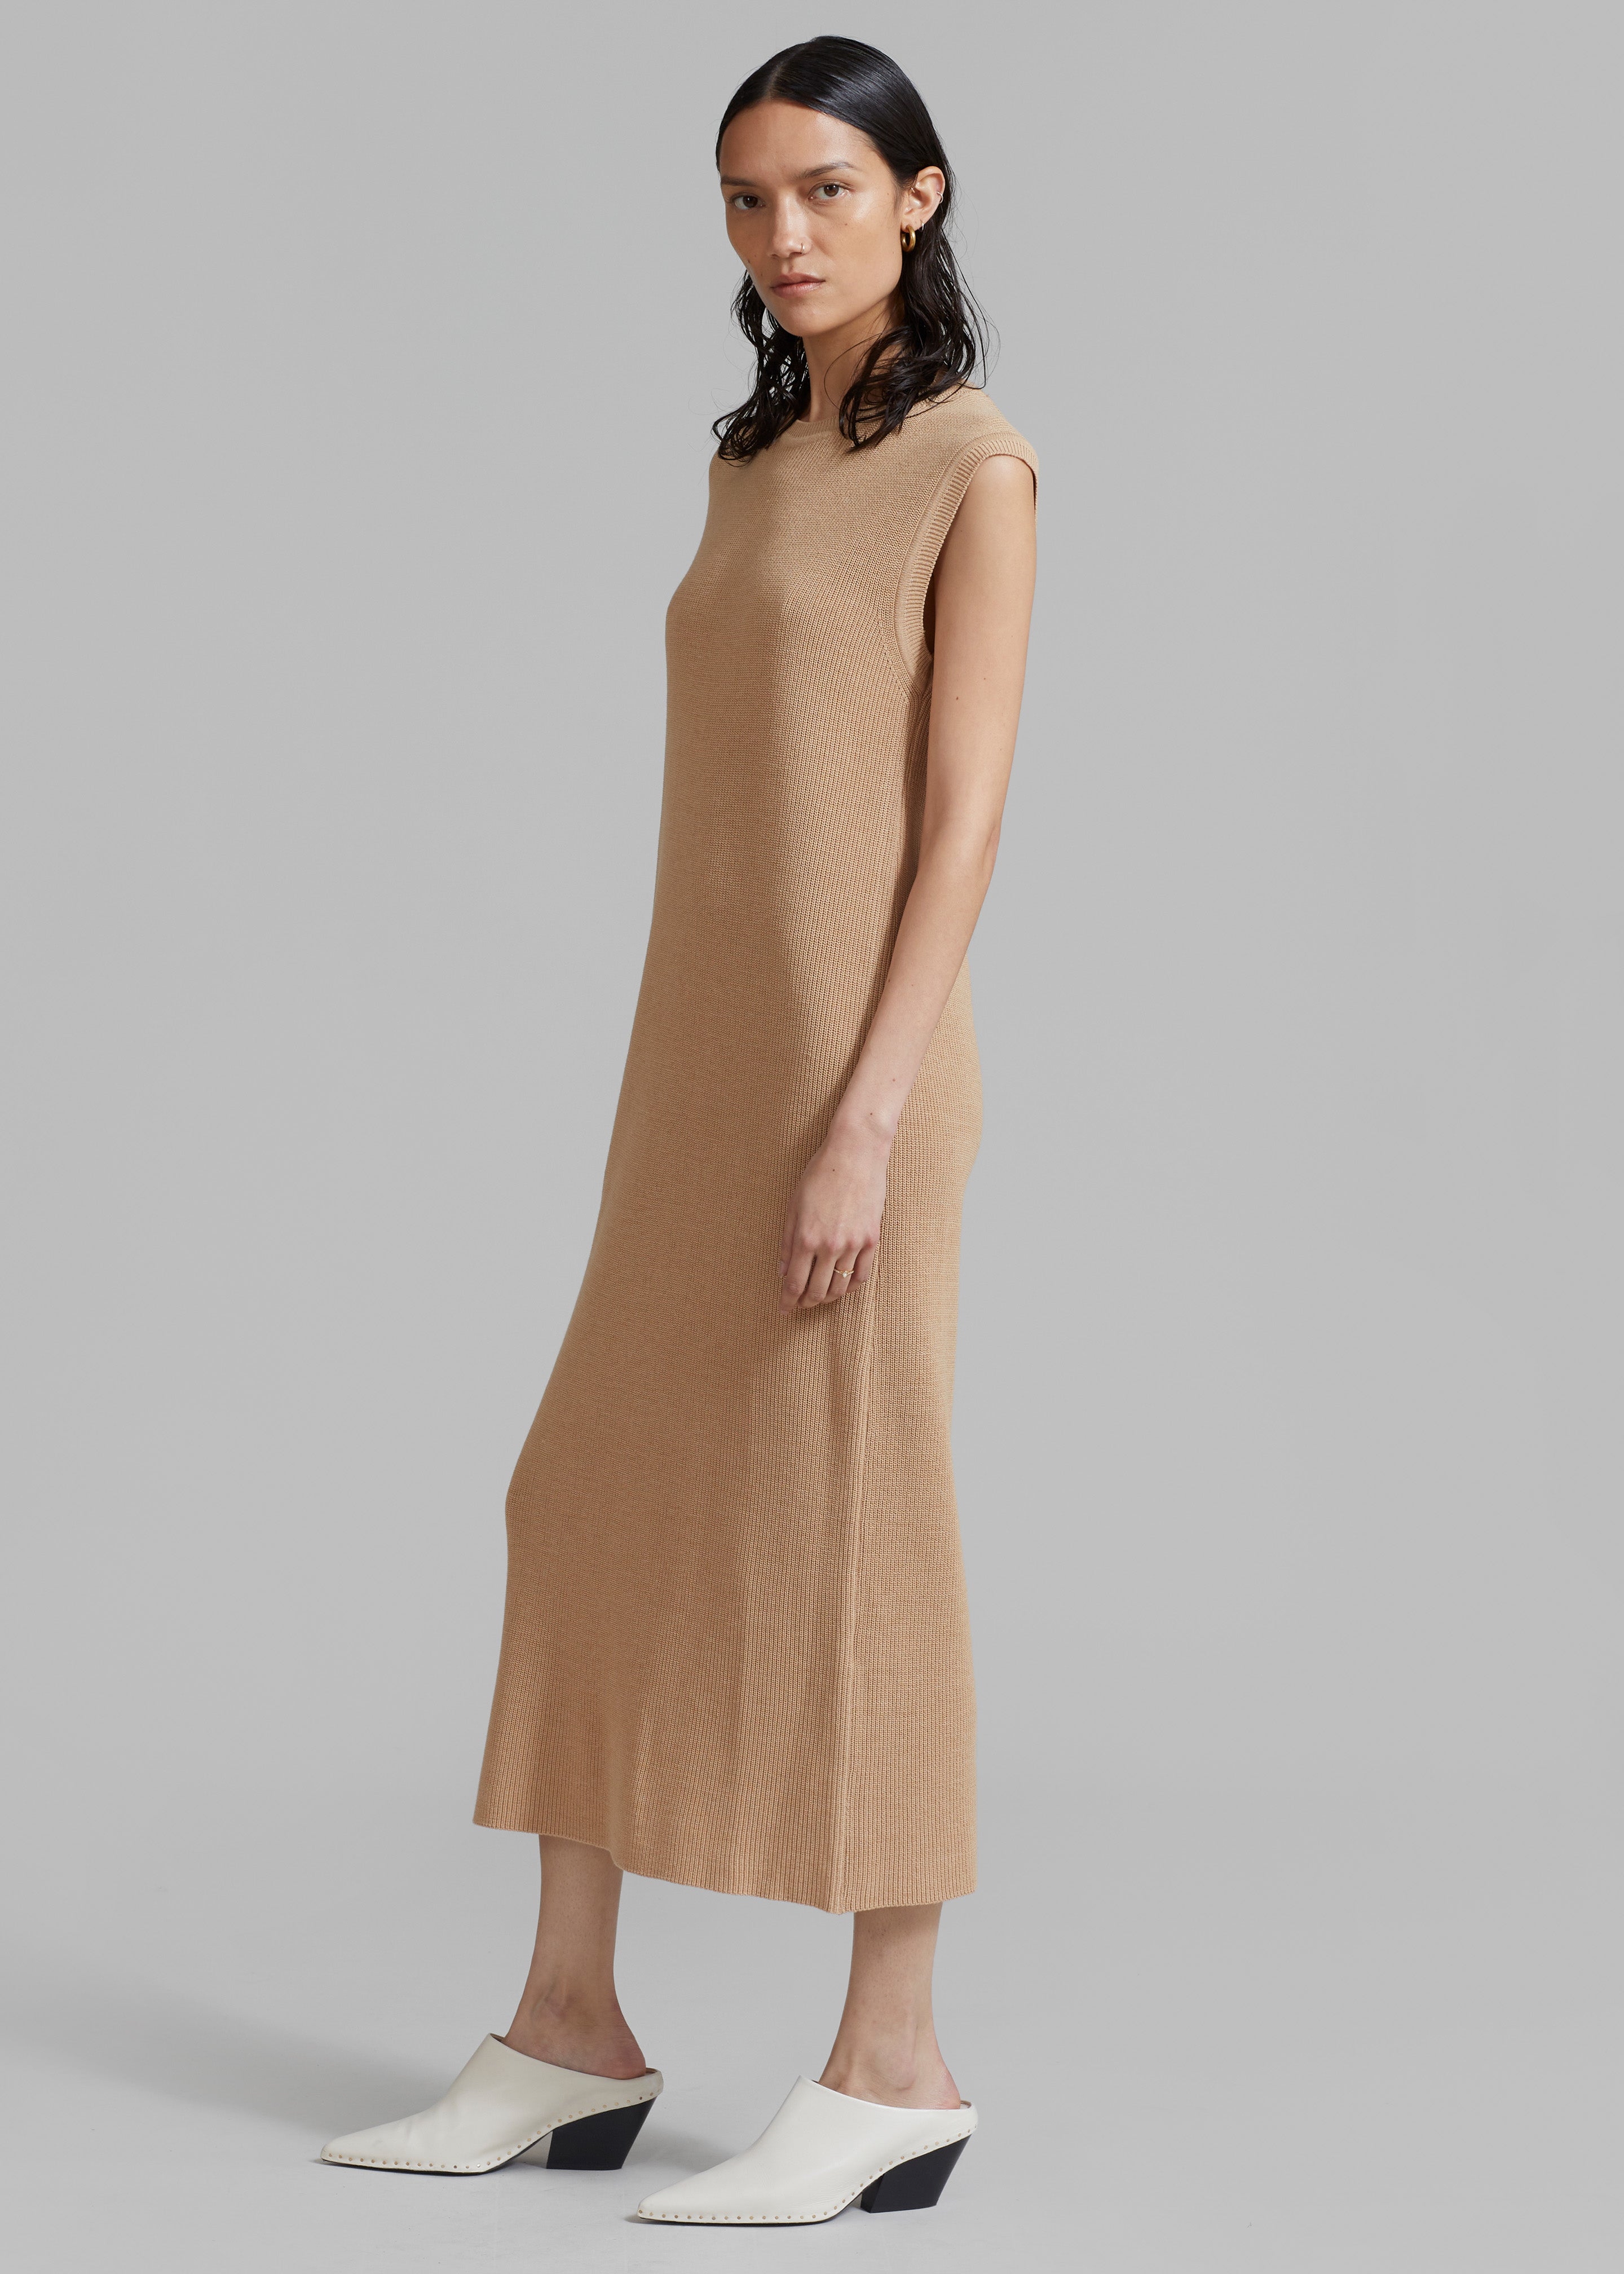 Rosie Knit Dress - Camel - 1